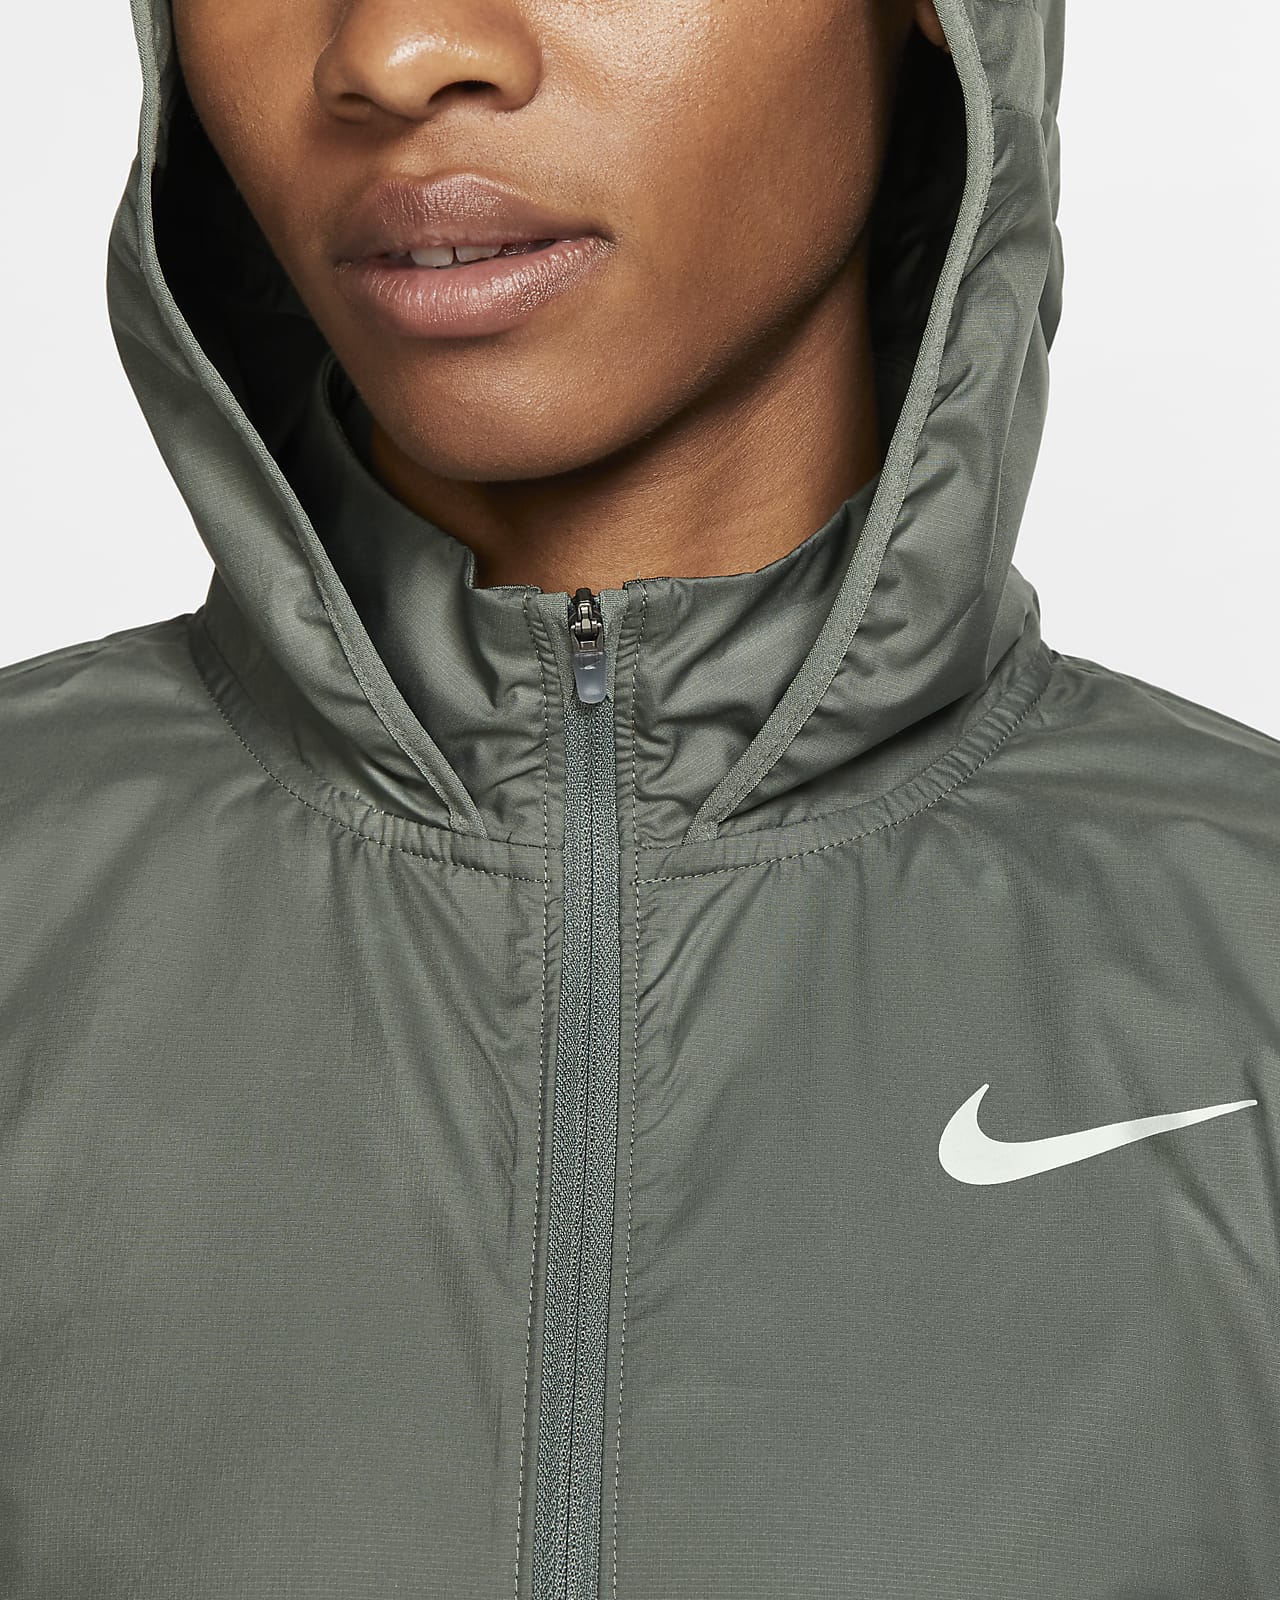 Packable Running Rain Jacket. Nike 